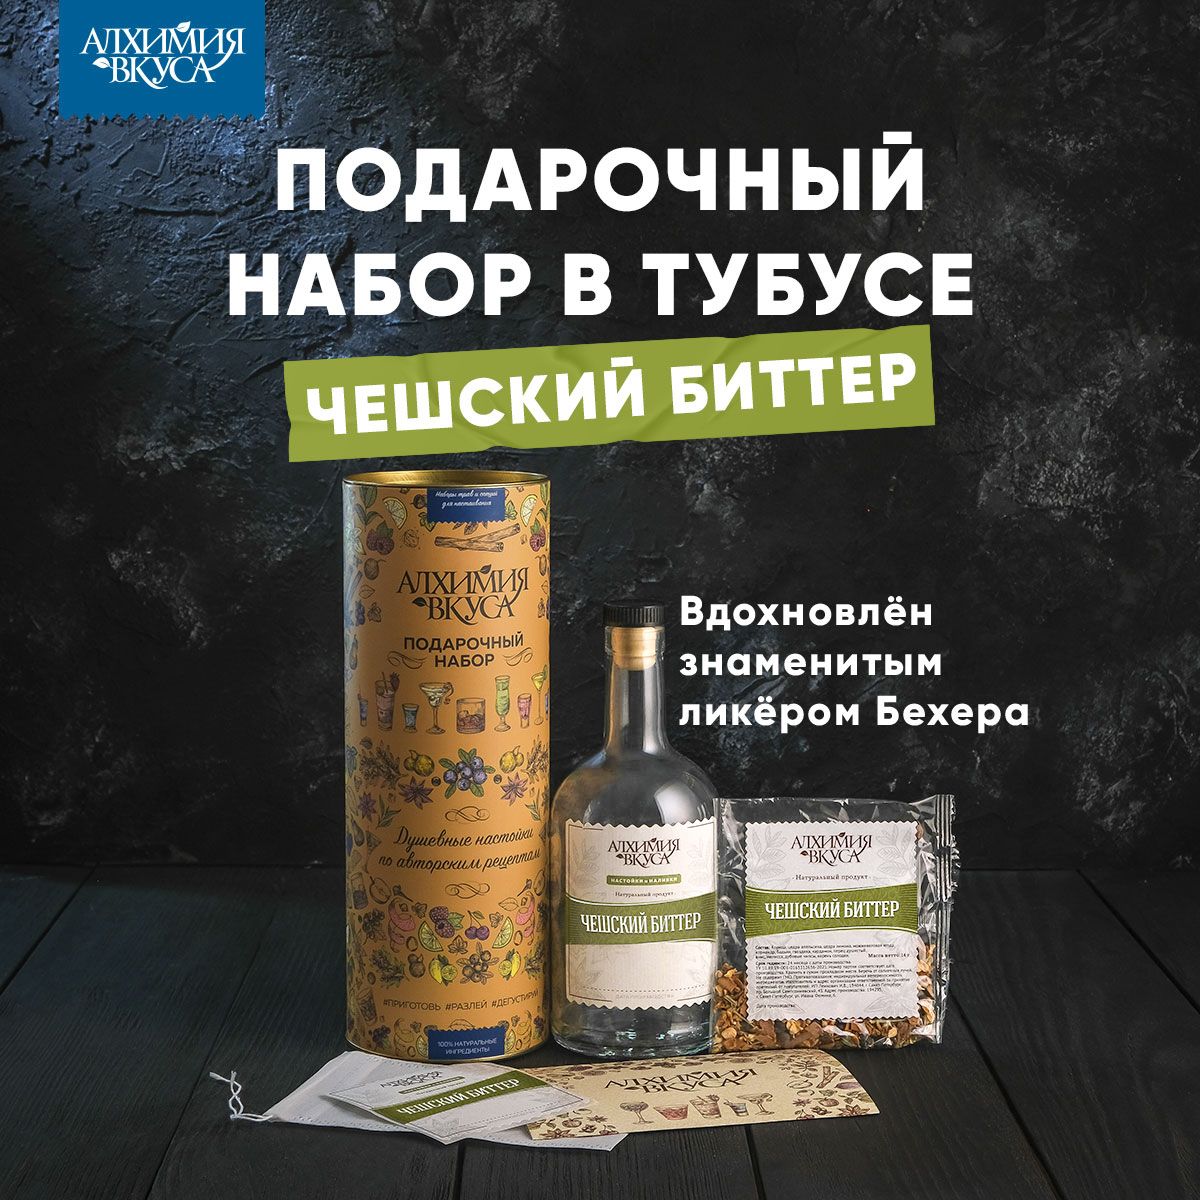 ПодарочныйнаборвтубусеАлхимиявкуса"Чешскийбиттер"(1бутылка)